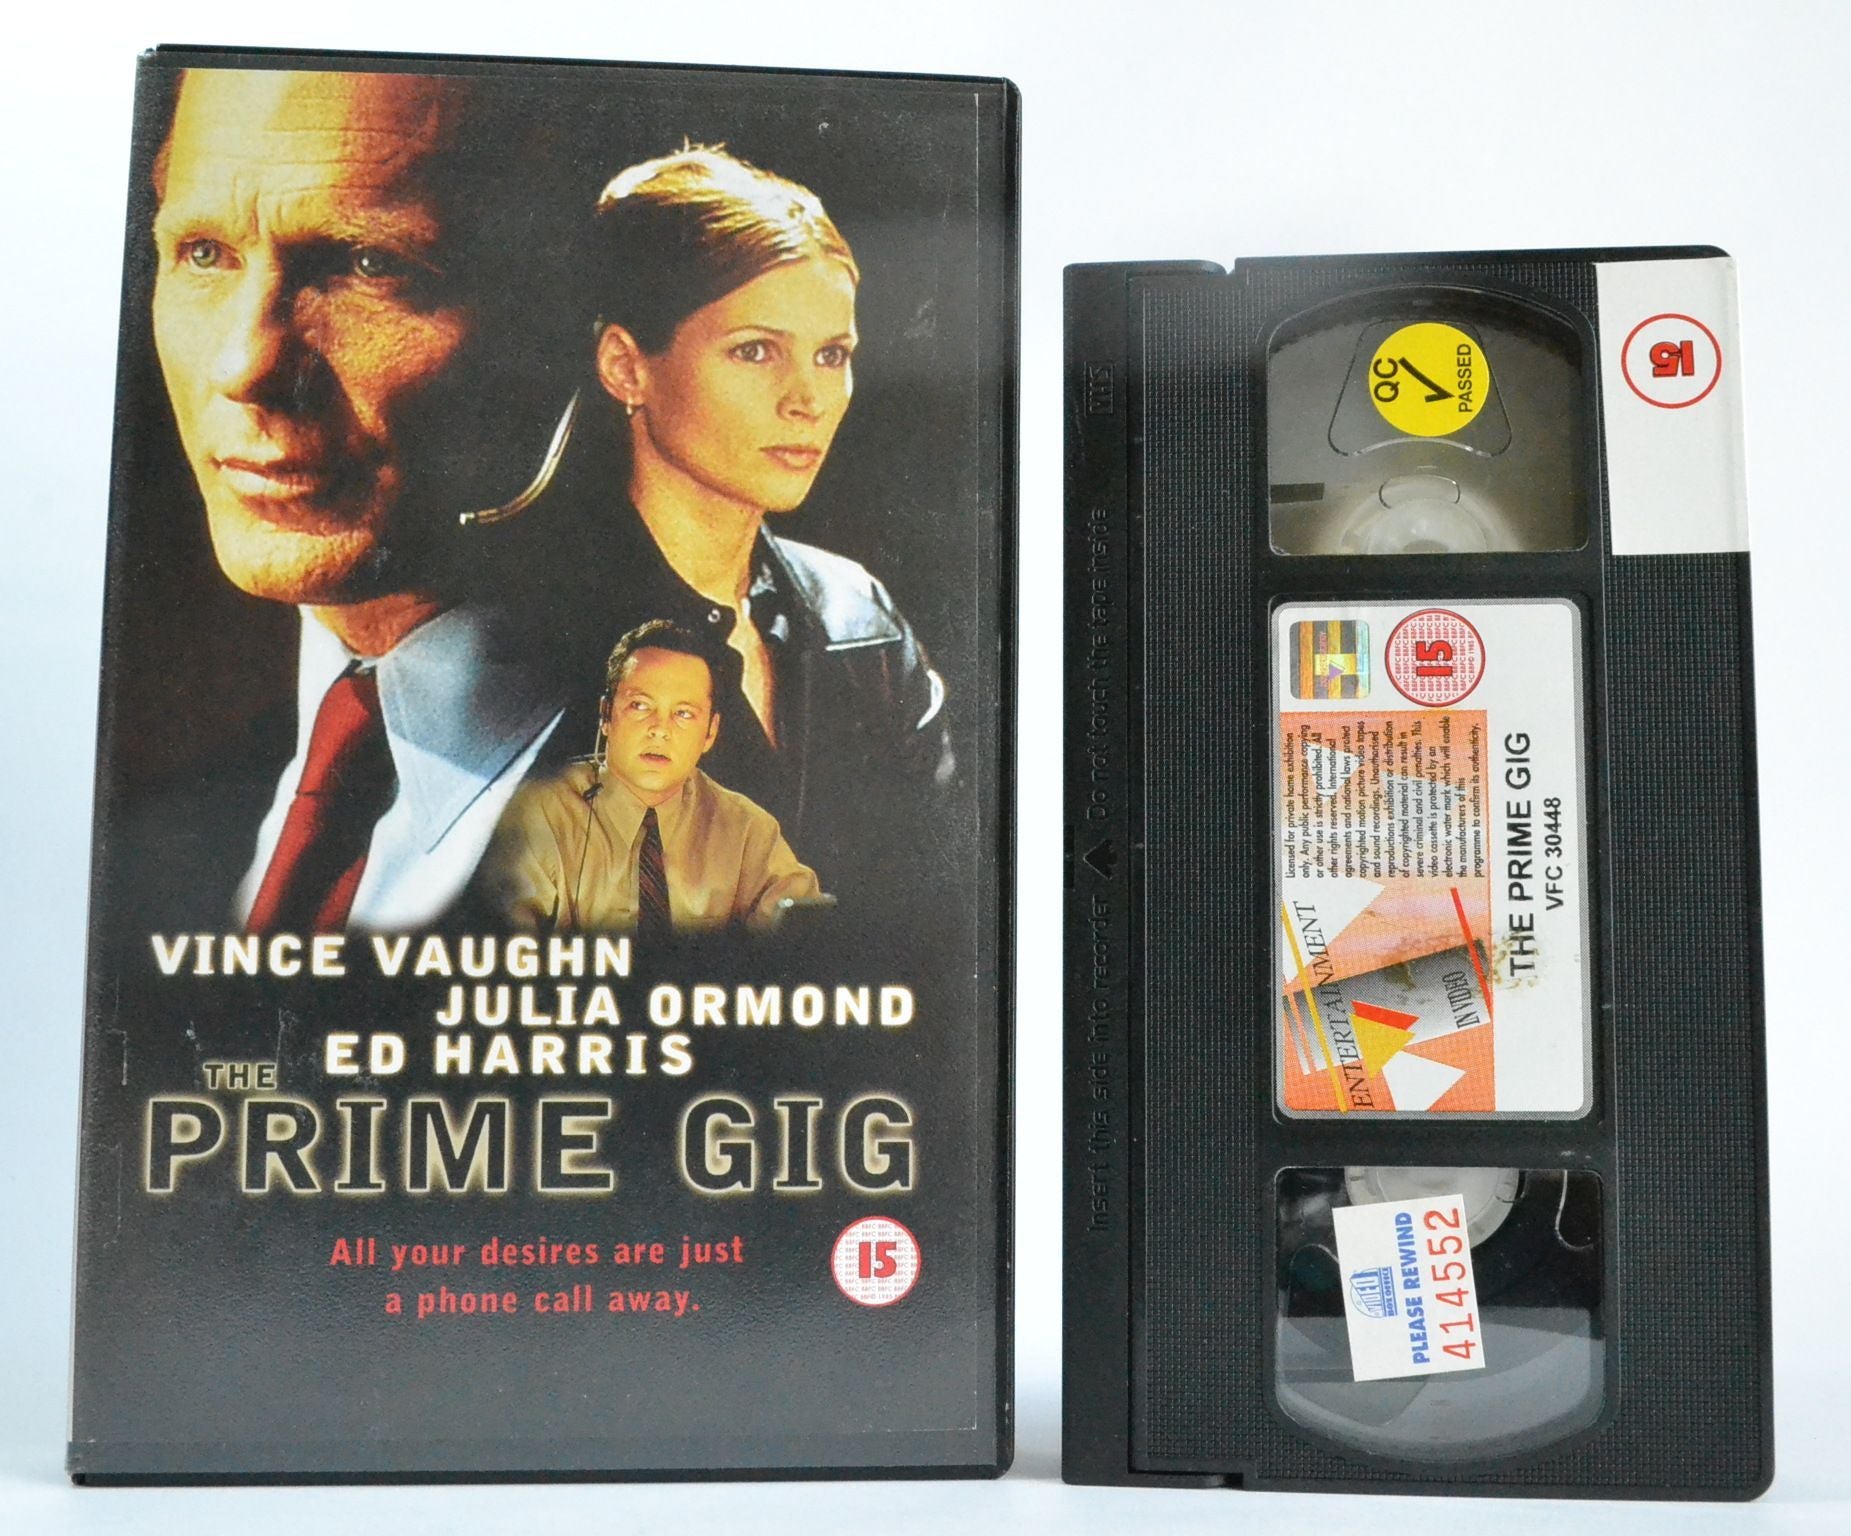 Prime Gig: Vince Vaughn [Gift Of The Gab] Thriller - Ed Harris - Ex-Rental VHS-